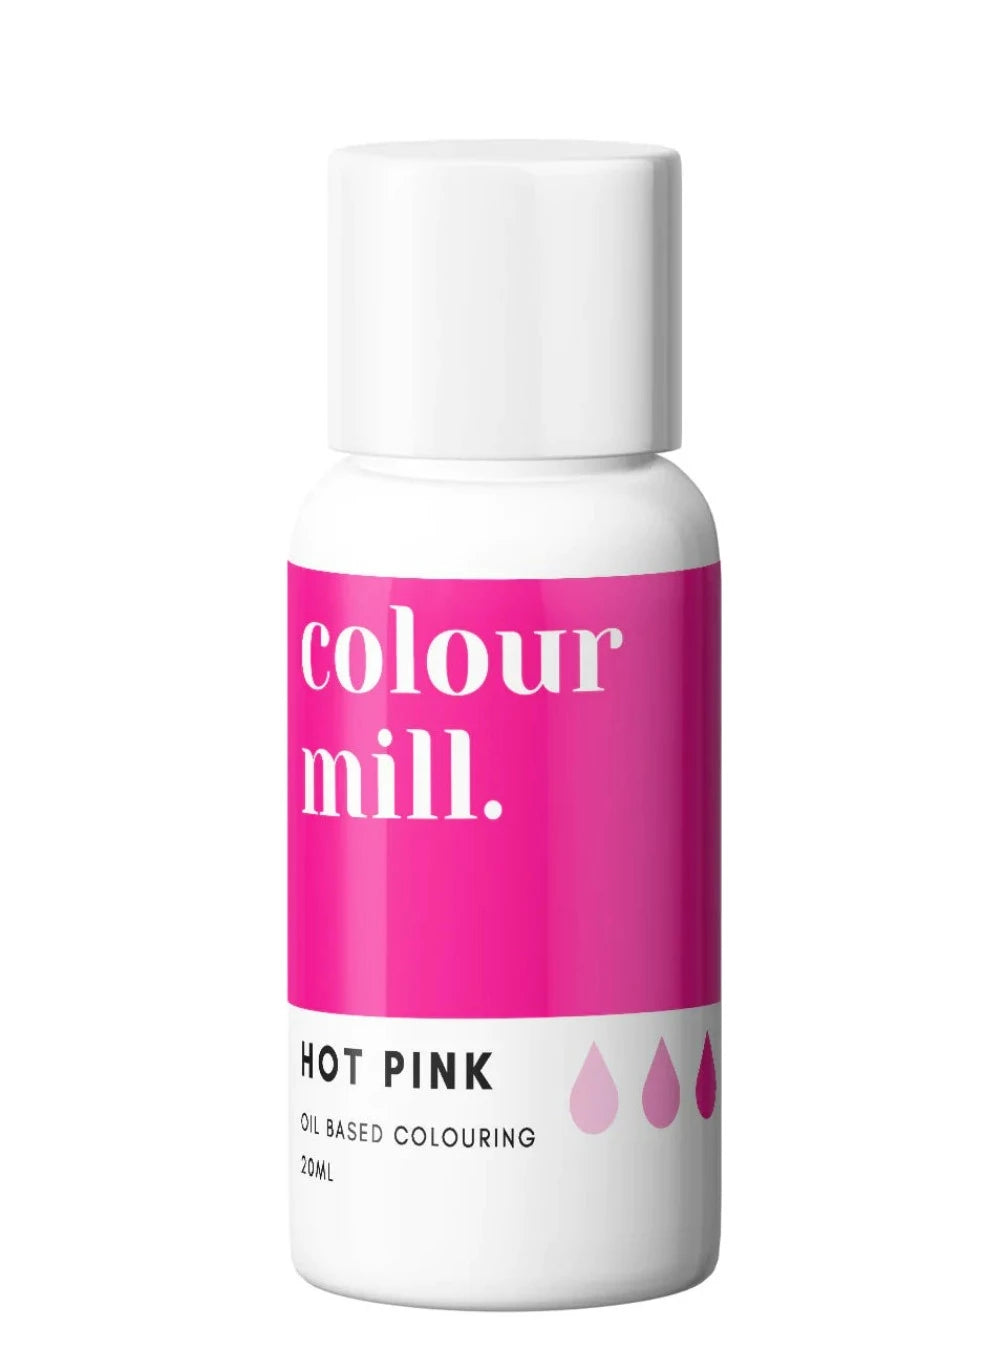 hot pink colour mill, colour mill, pink colour mill, hot pink colour mill, oil based colour mill, color para chocolate, color food 